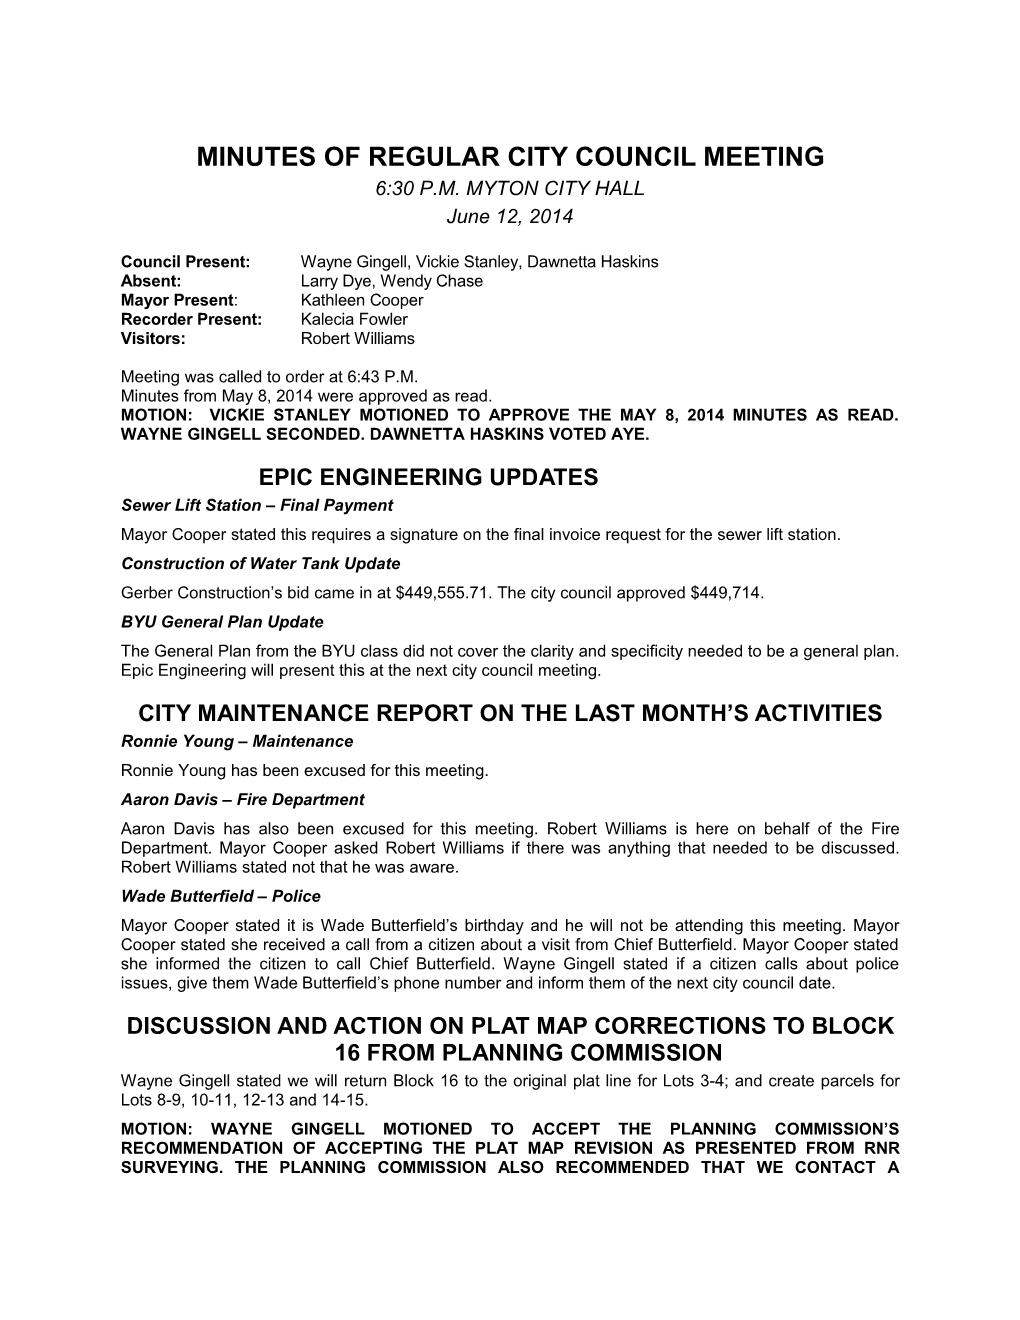 Minutes of Regular City Council Meeting s1